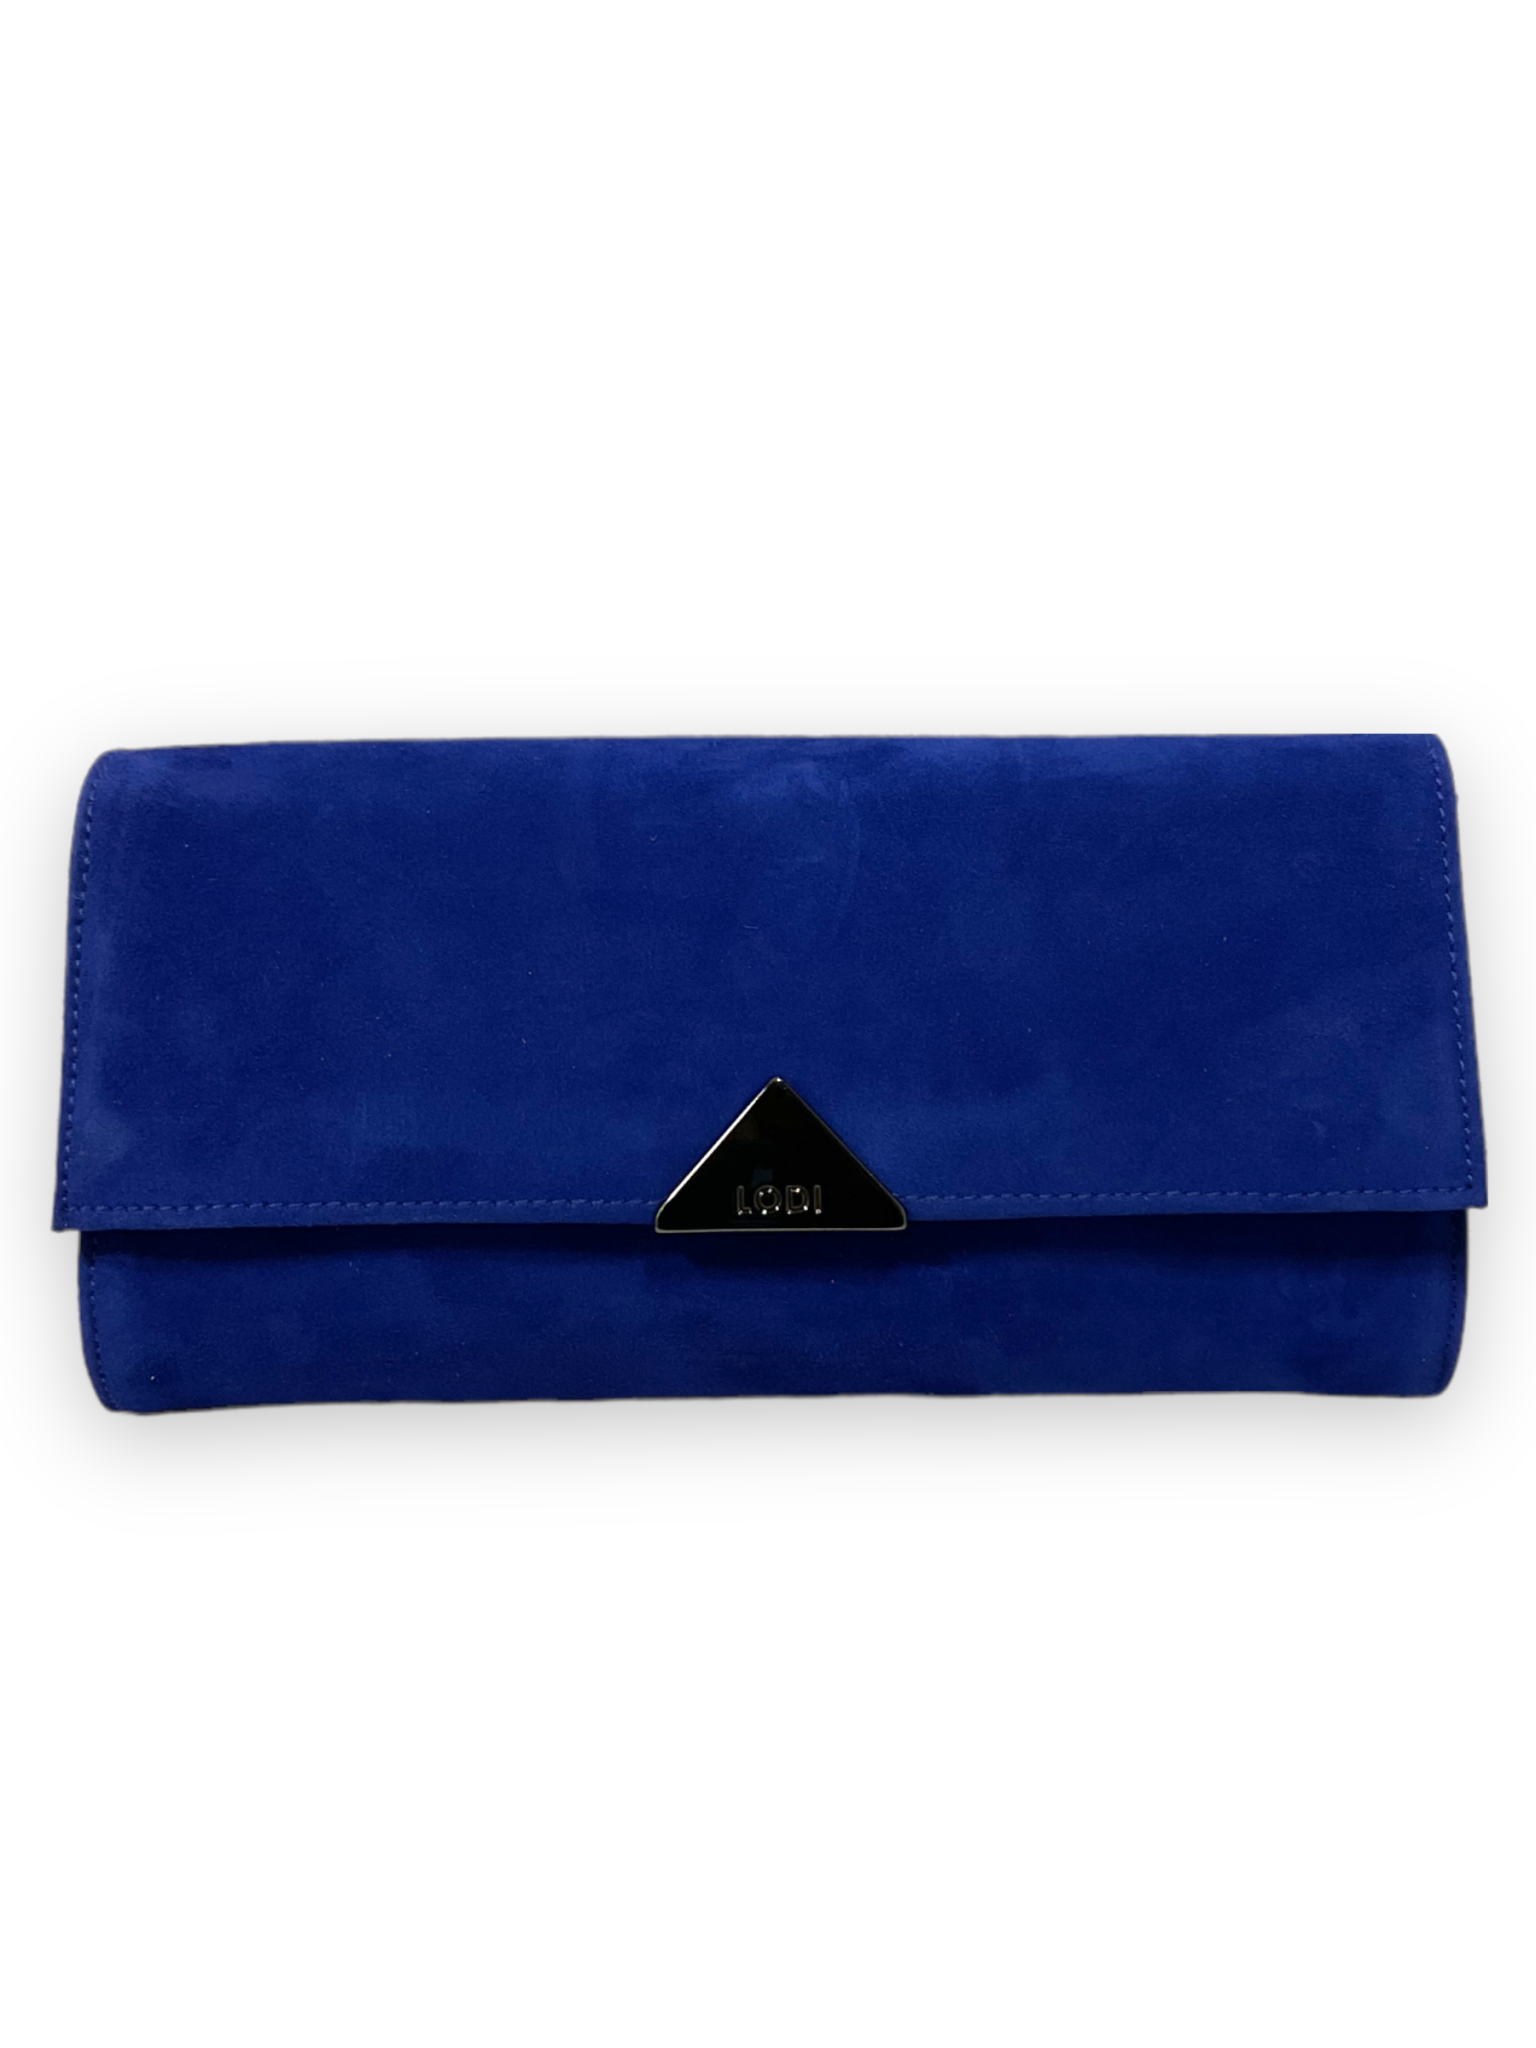 Suedette Singular Style Leather Handbag Organizer for Hermes Birkin 25,  Birkin 30, Birkin 35 and Birkin 40 in Royal Blue Color